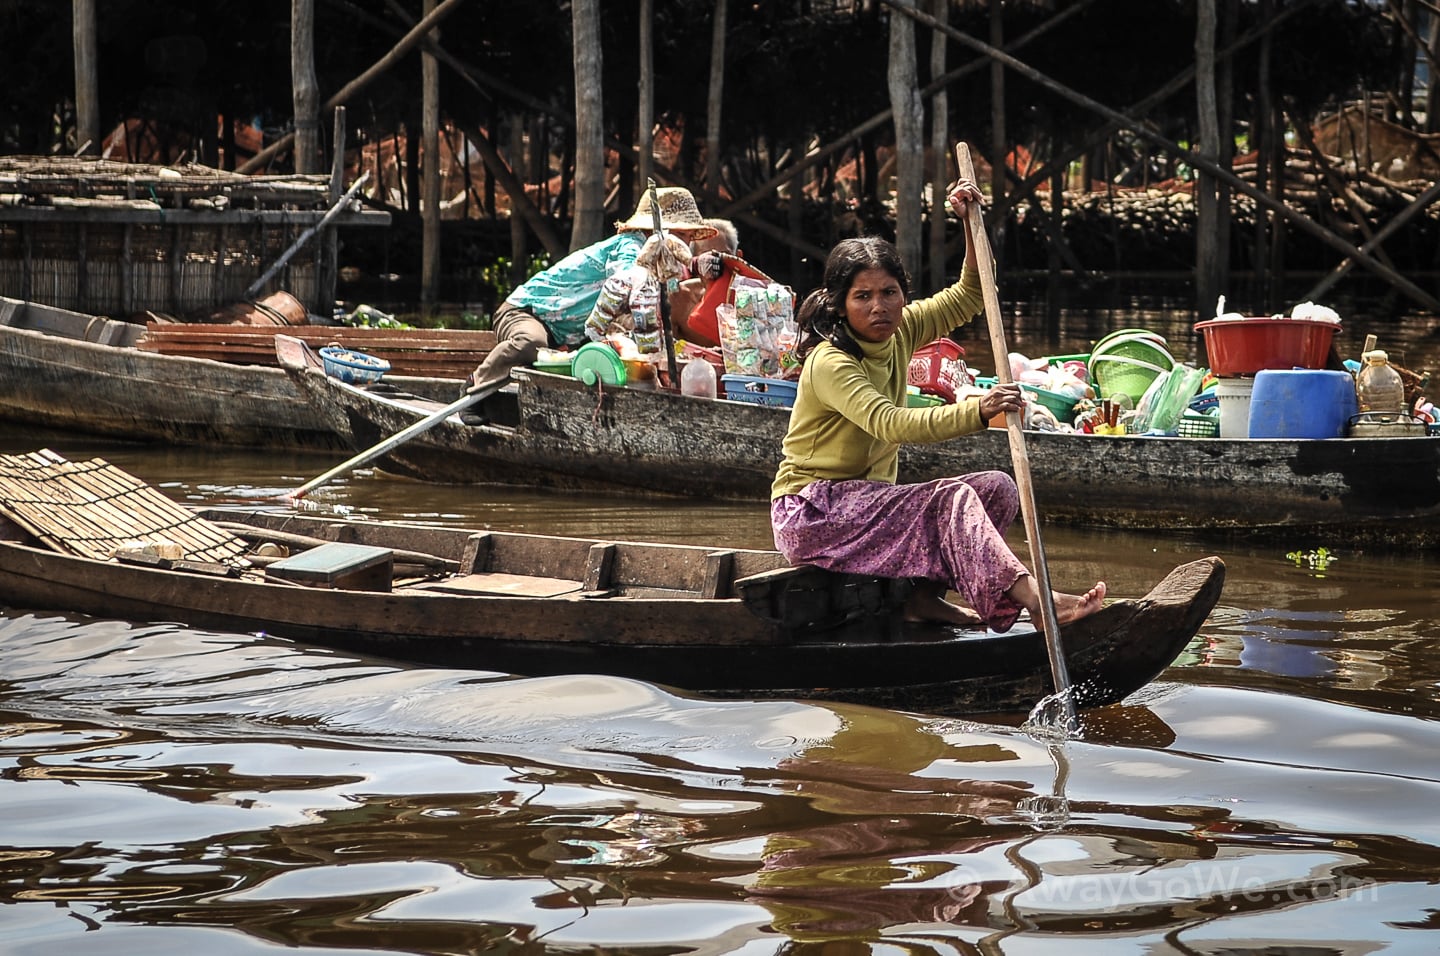 Kompong Phluk Floating Village: Visiting on Your Own - AwayGoWe